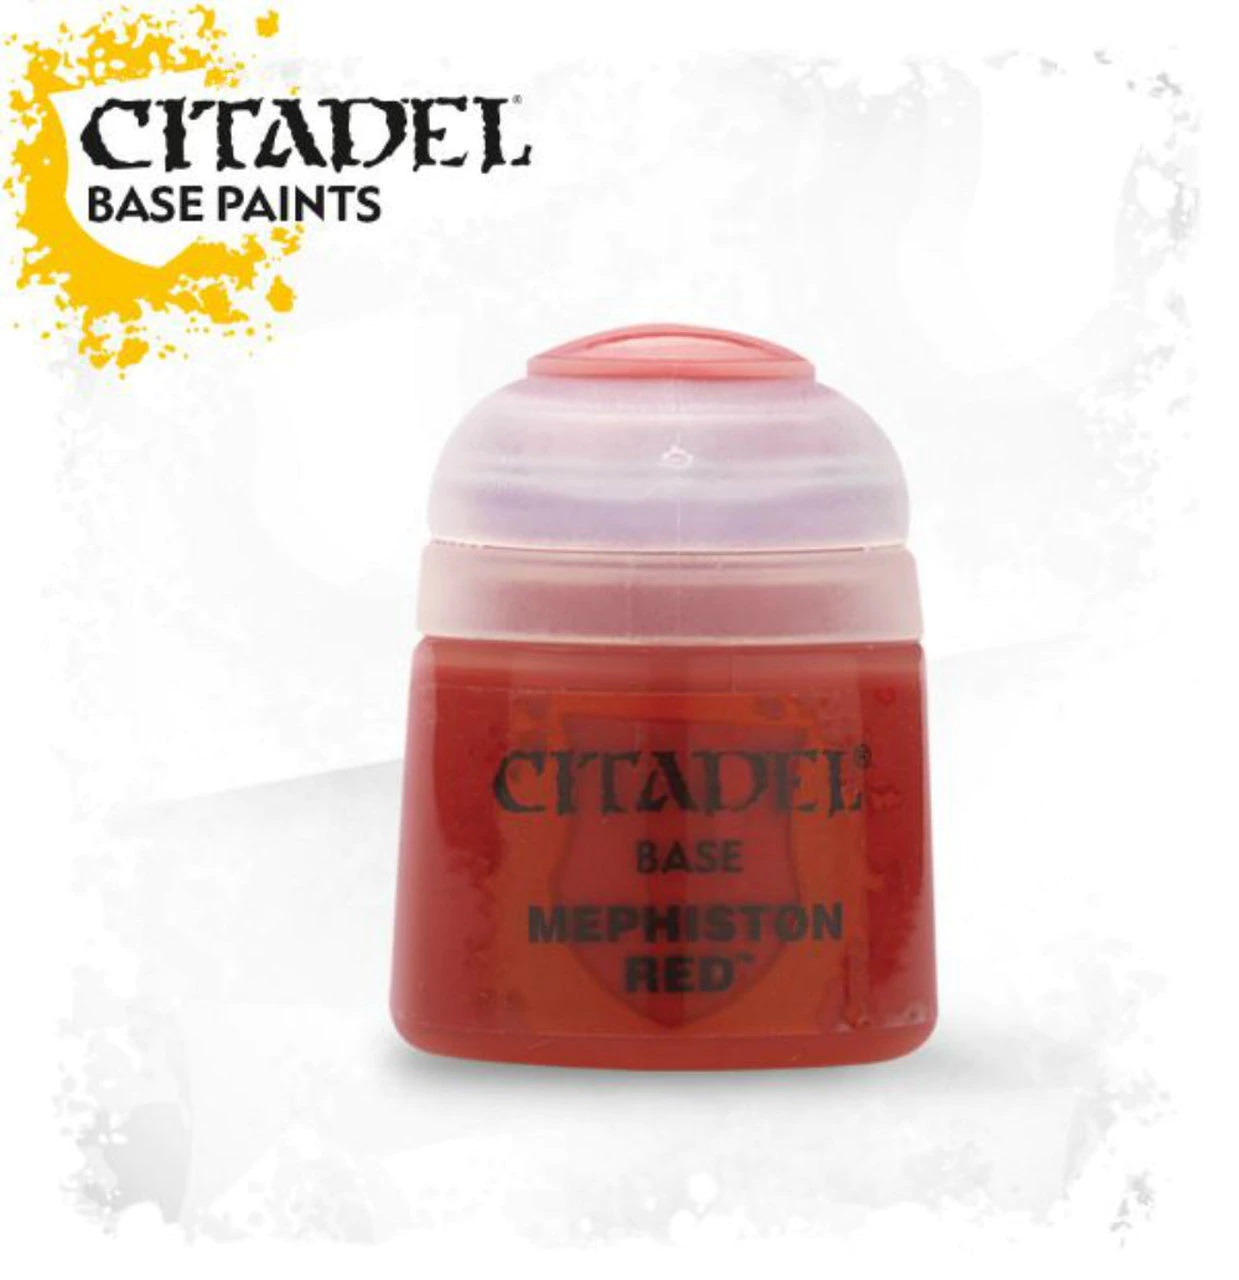 Citadel Paint: Base - Mephiston Red